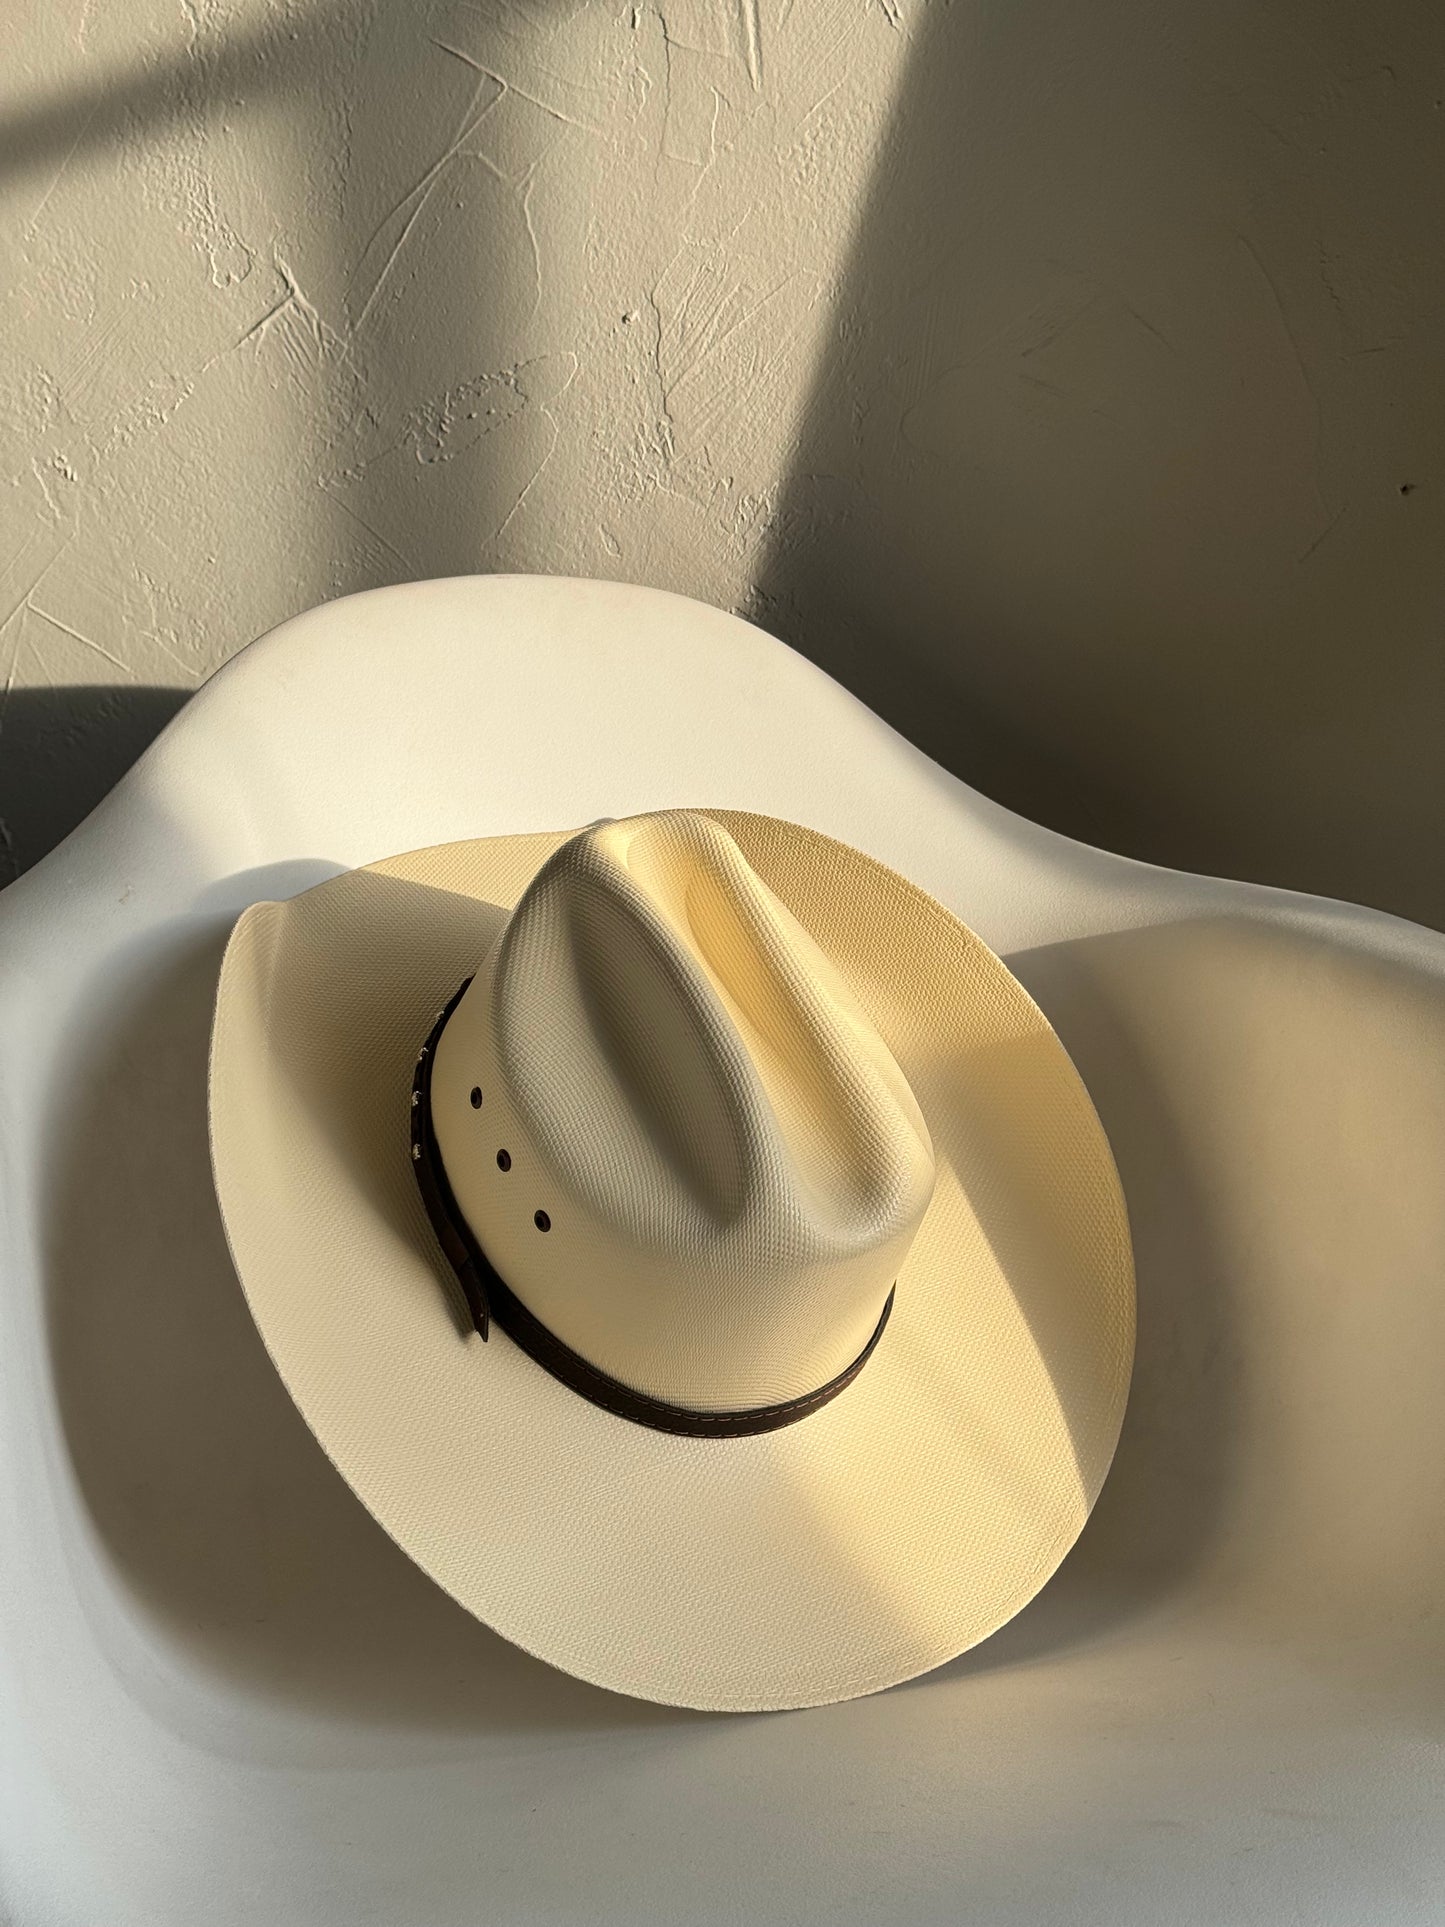 Kori Classic Straw Cowboy Hat W/ Leather Belt & Silver Studs